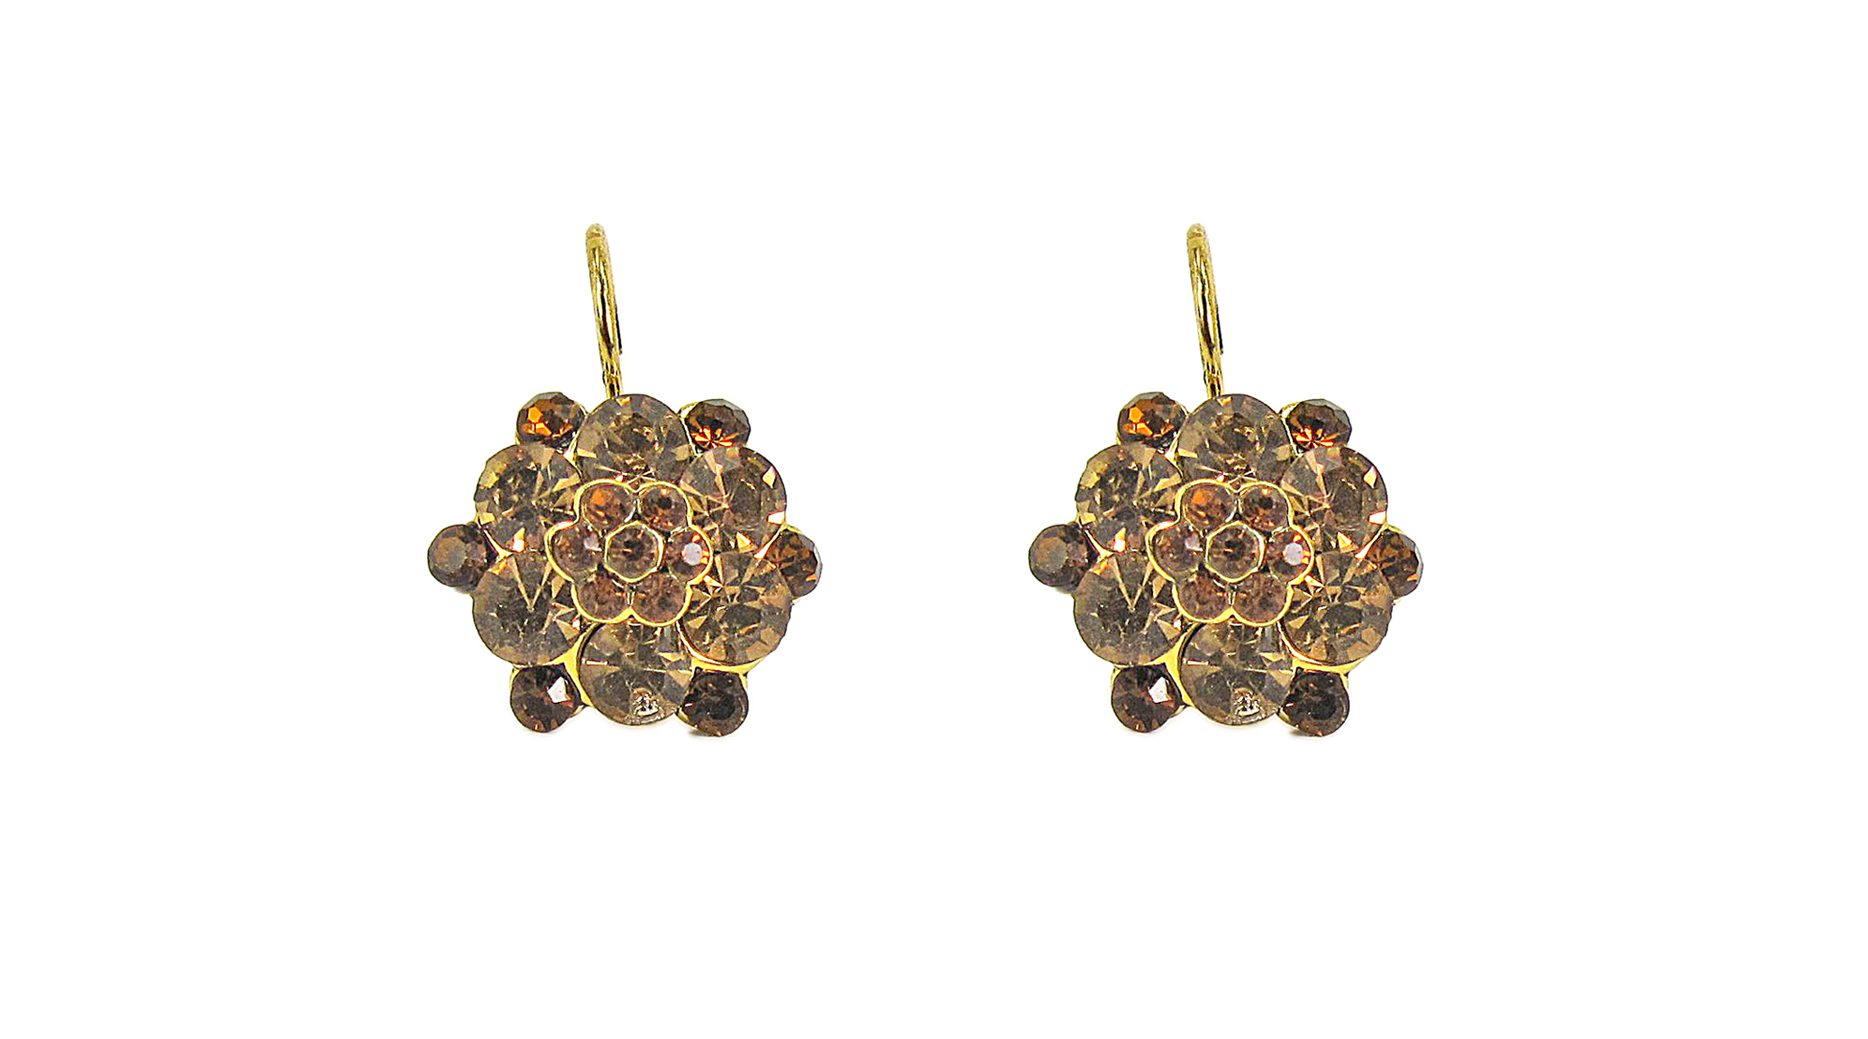 earrings with brown gems arranged like flowers